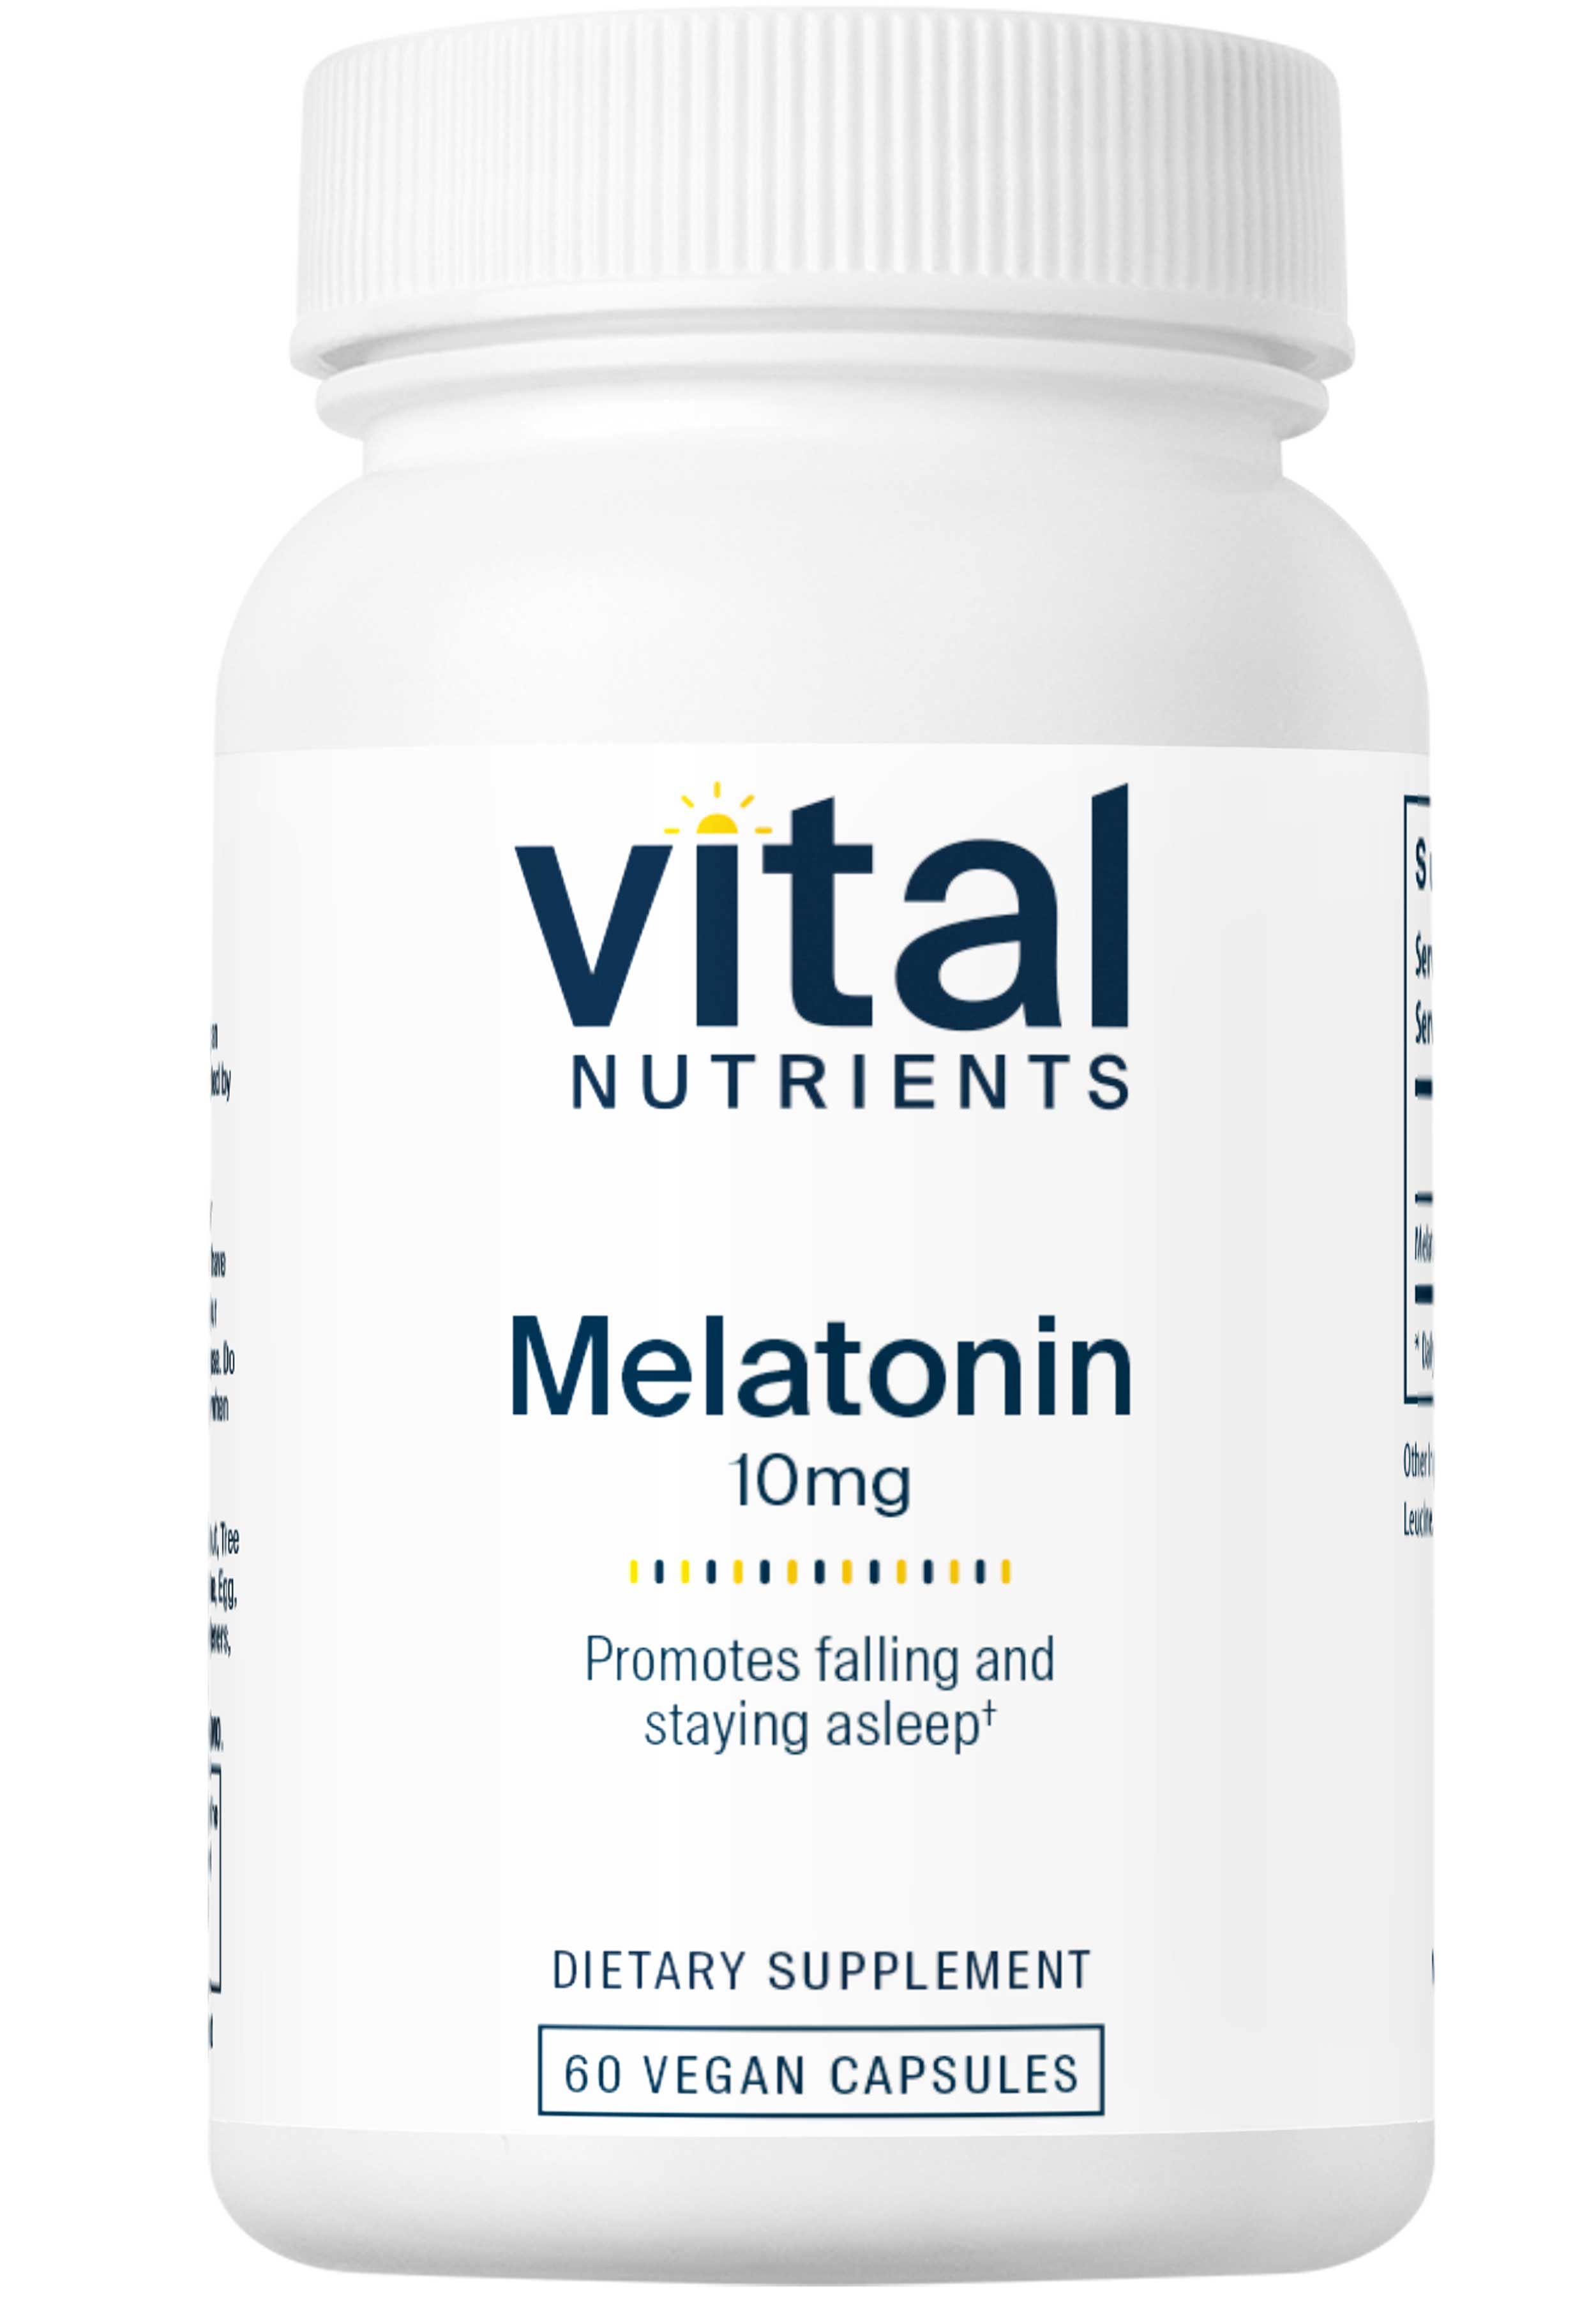 Vital Nutrients Melatonin 10mg